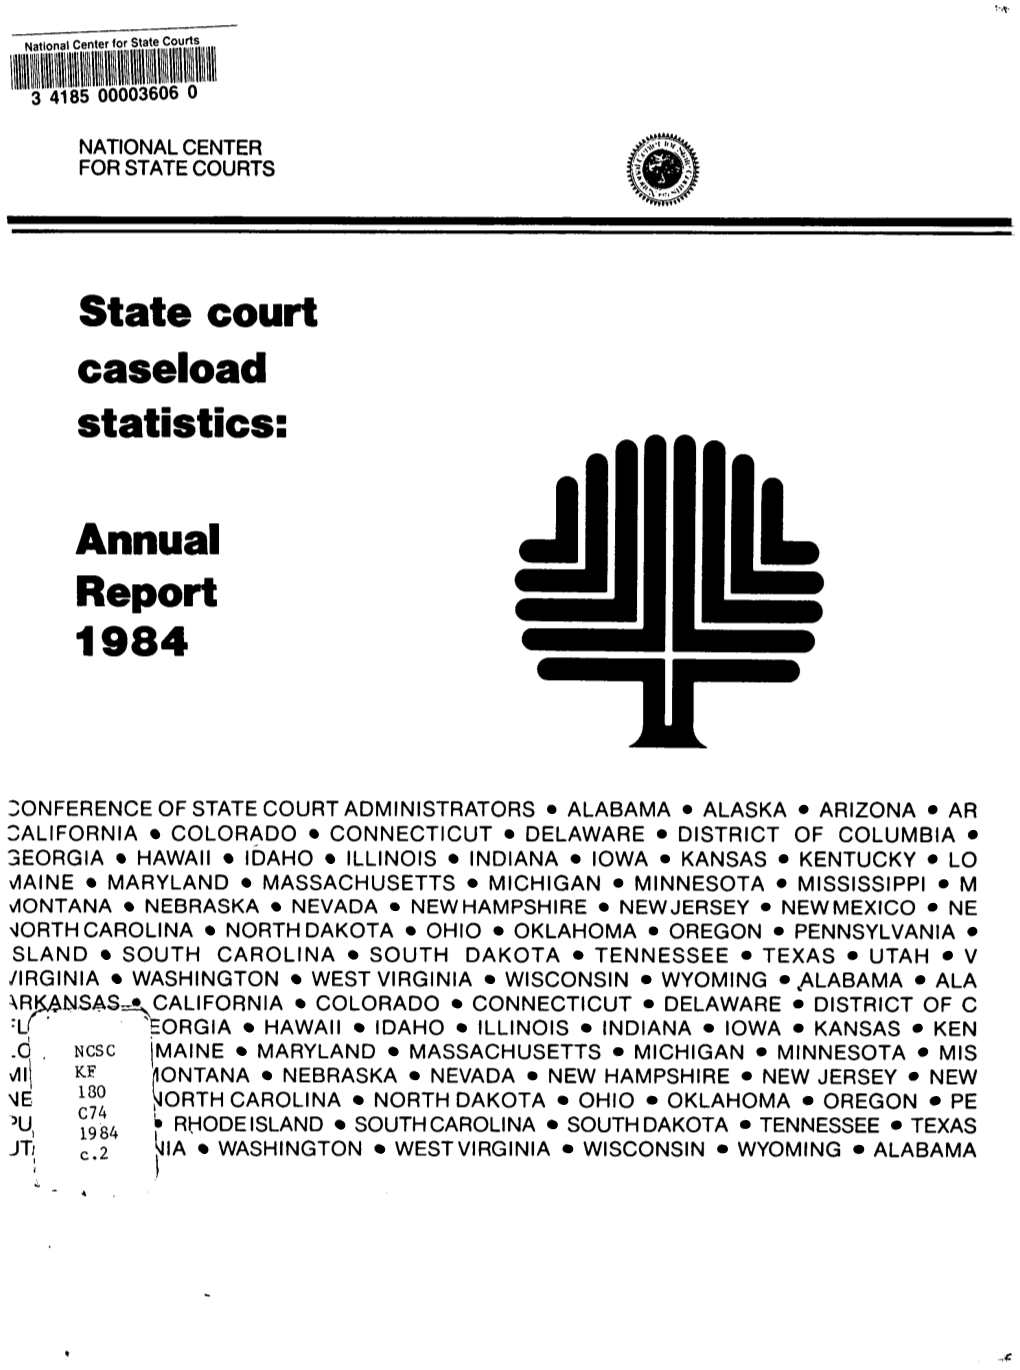 Annual Report, 1984